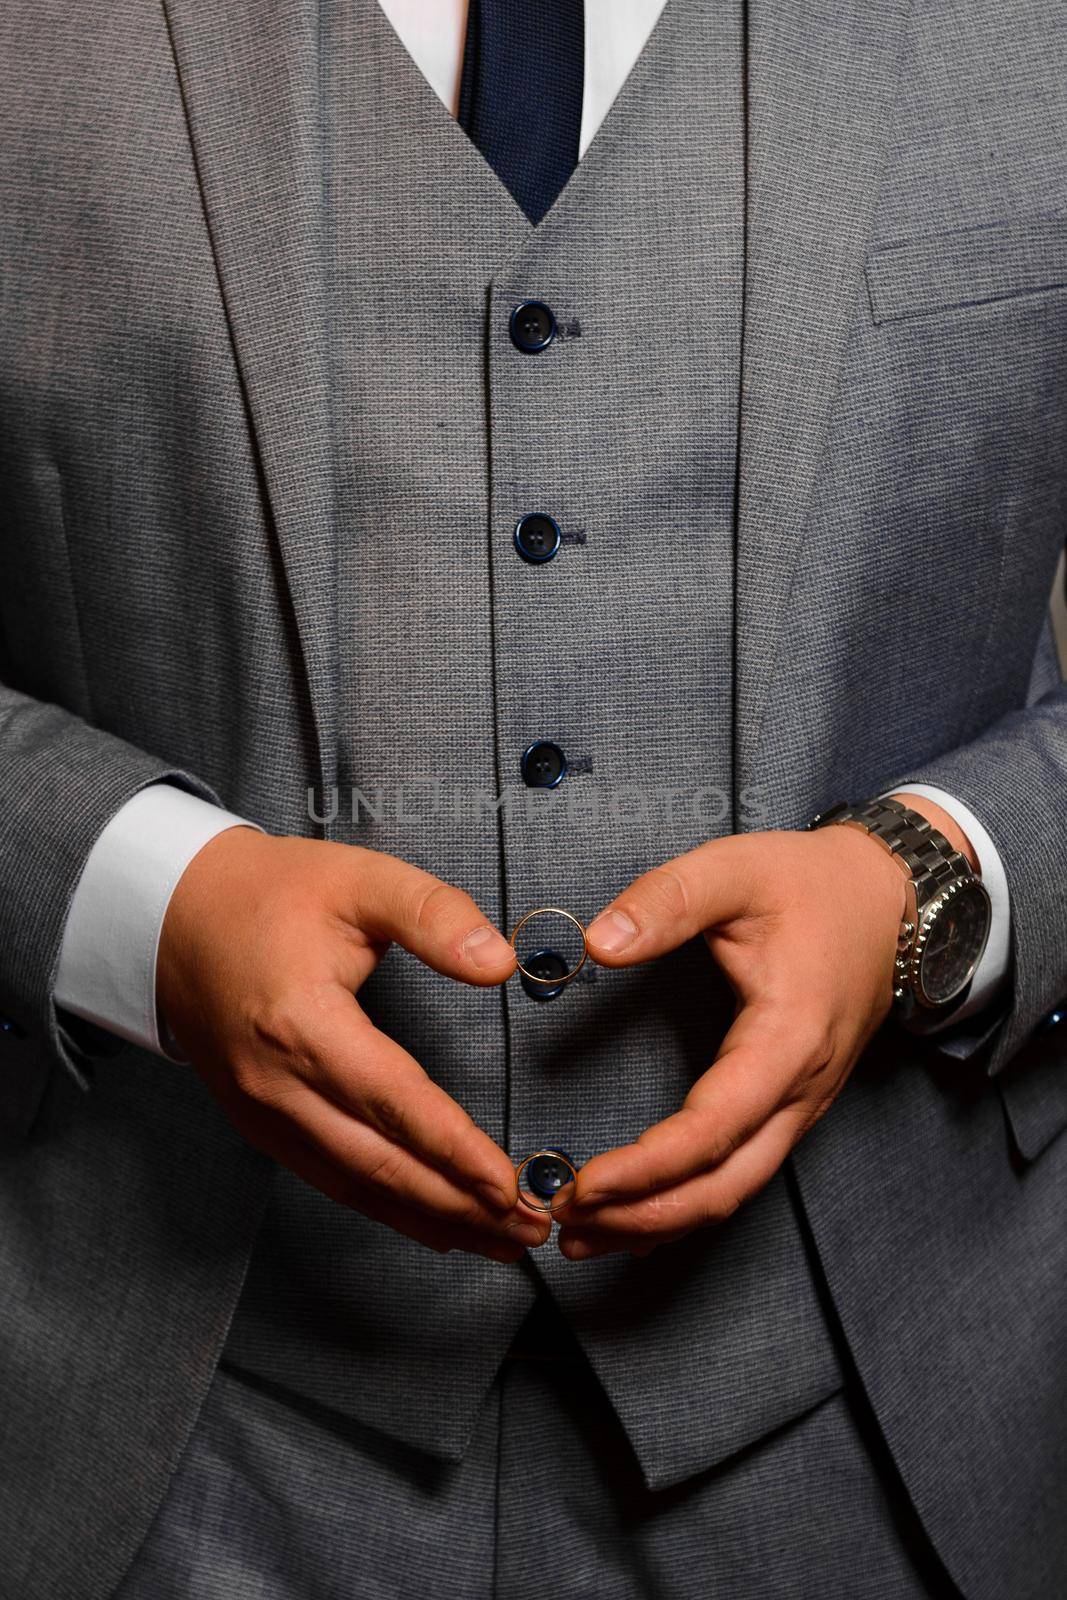 Groom and wedding rings, groom's wedding morning.2020